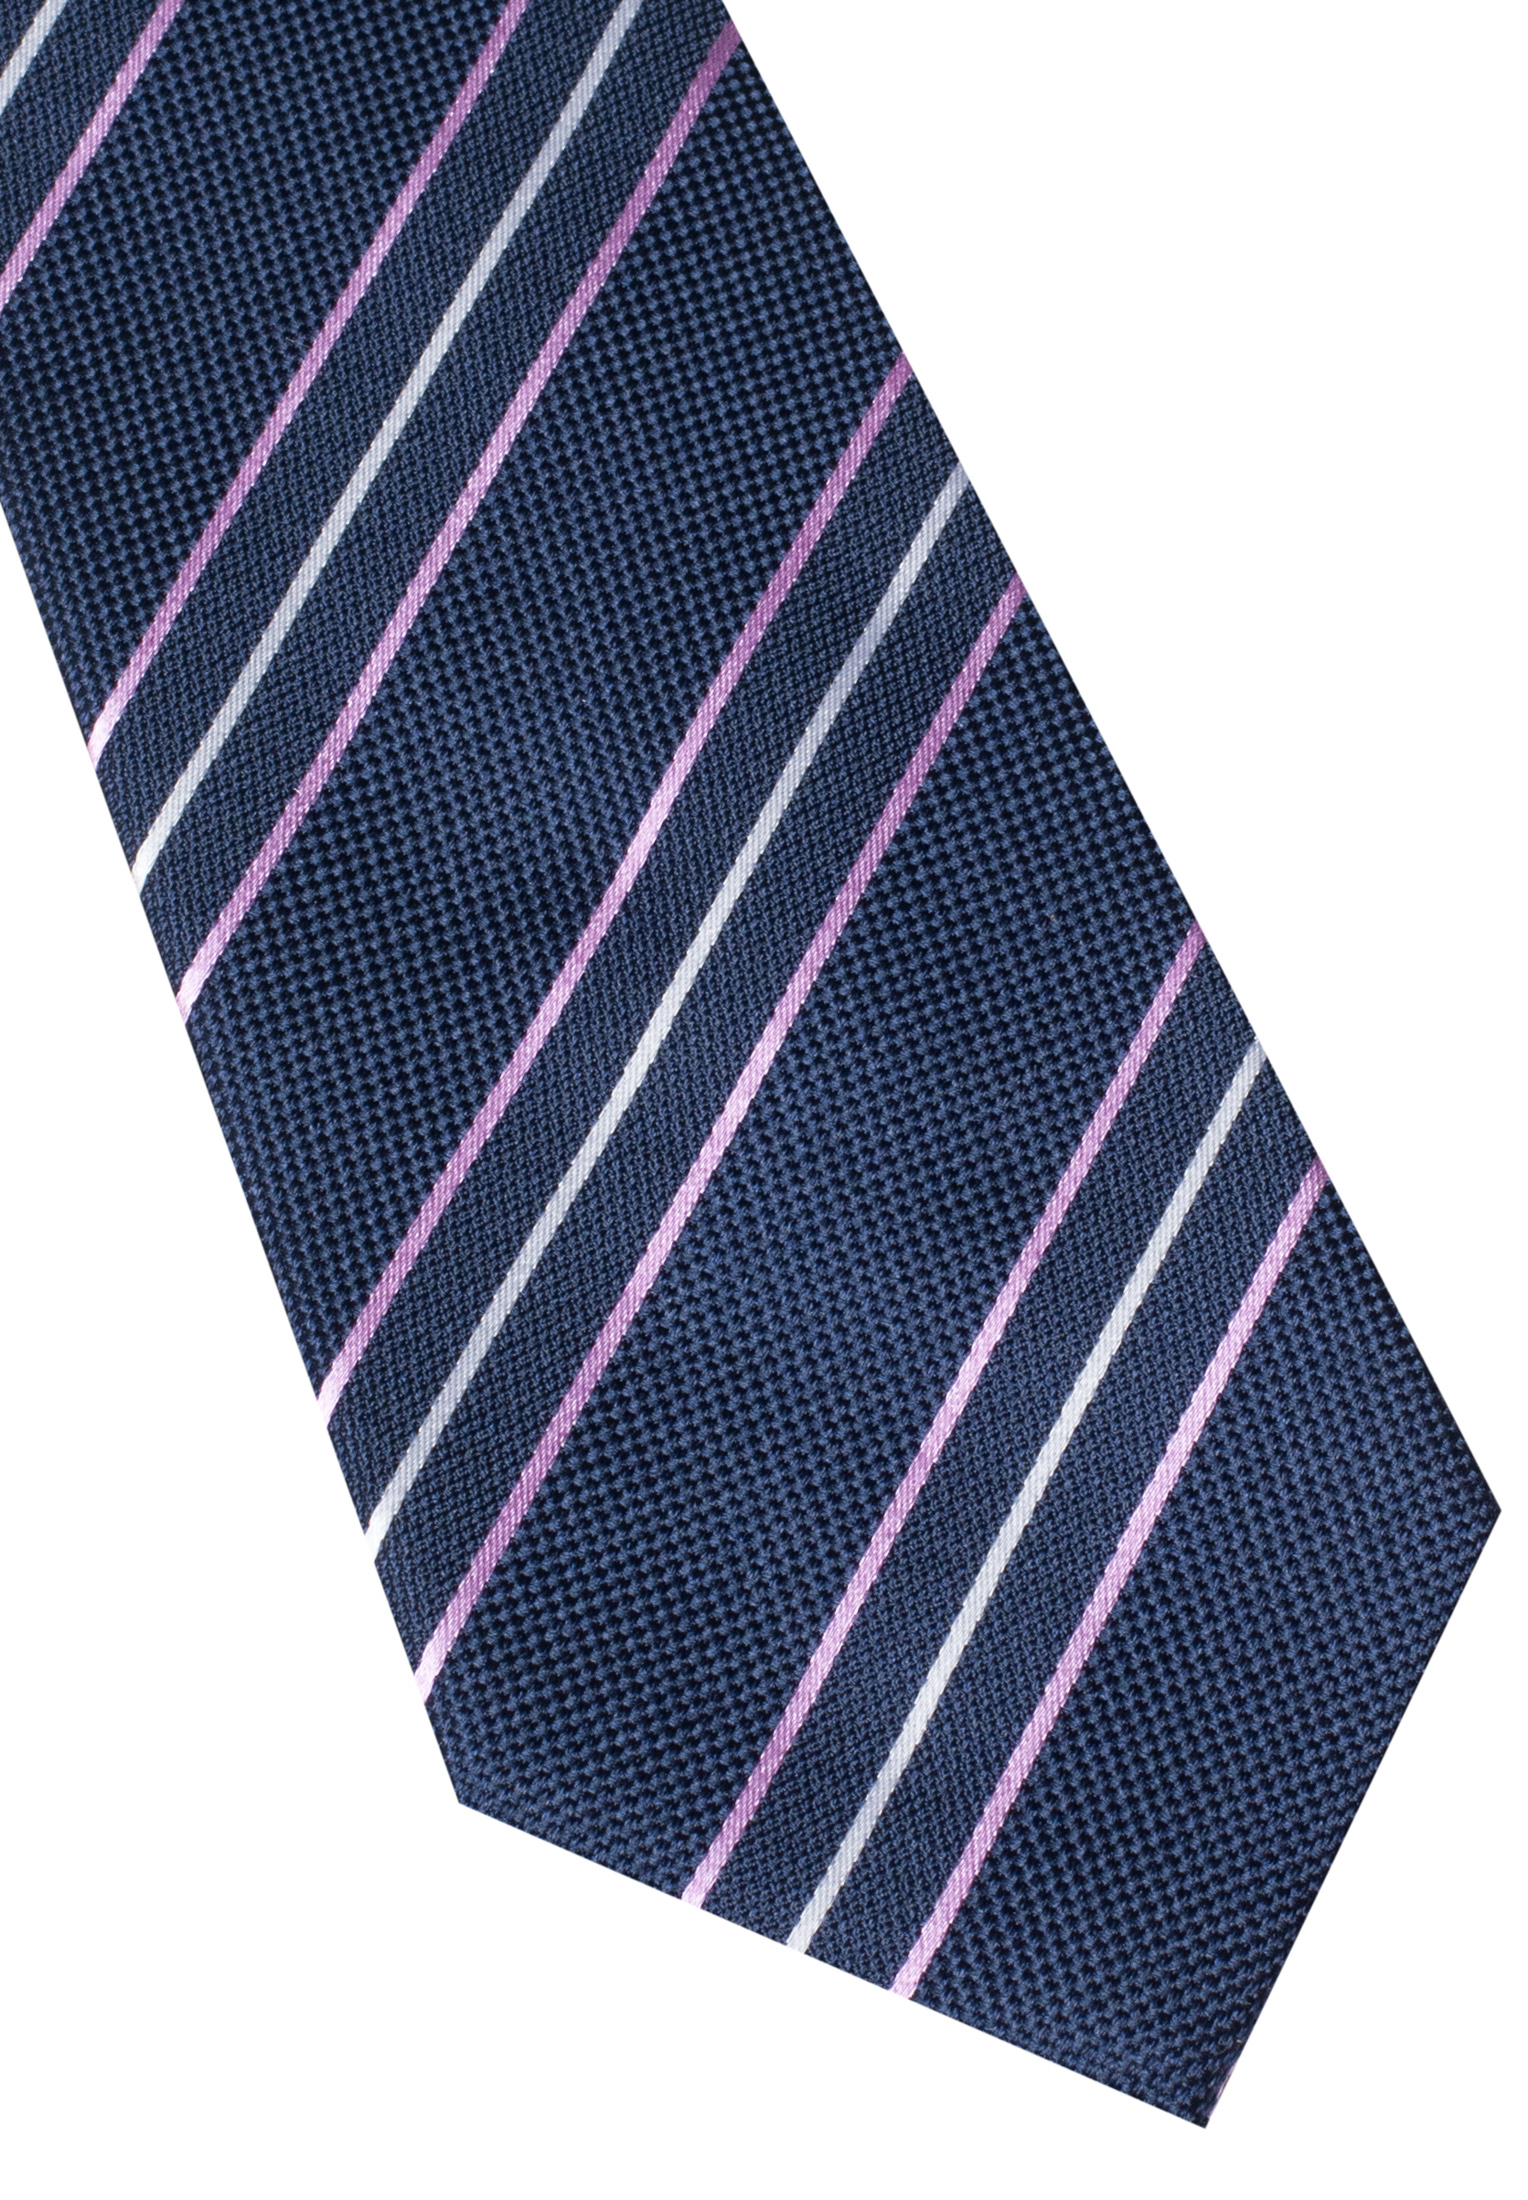 Krawatte in navy/rosa 1AC00533-81-90-142 | | gestreift | navy/rosa 142